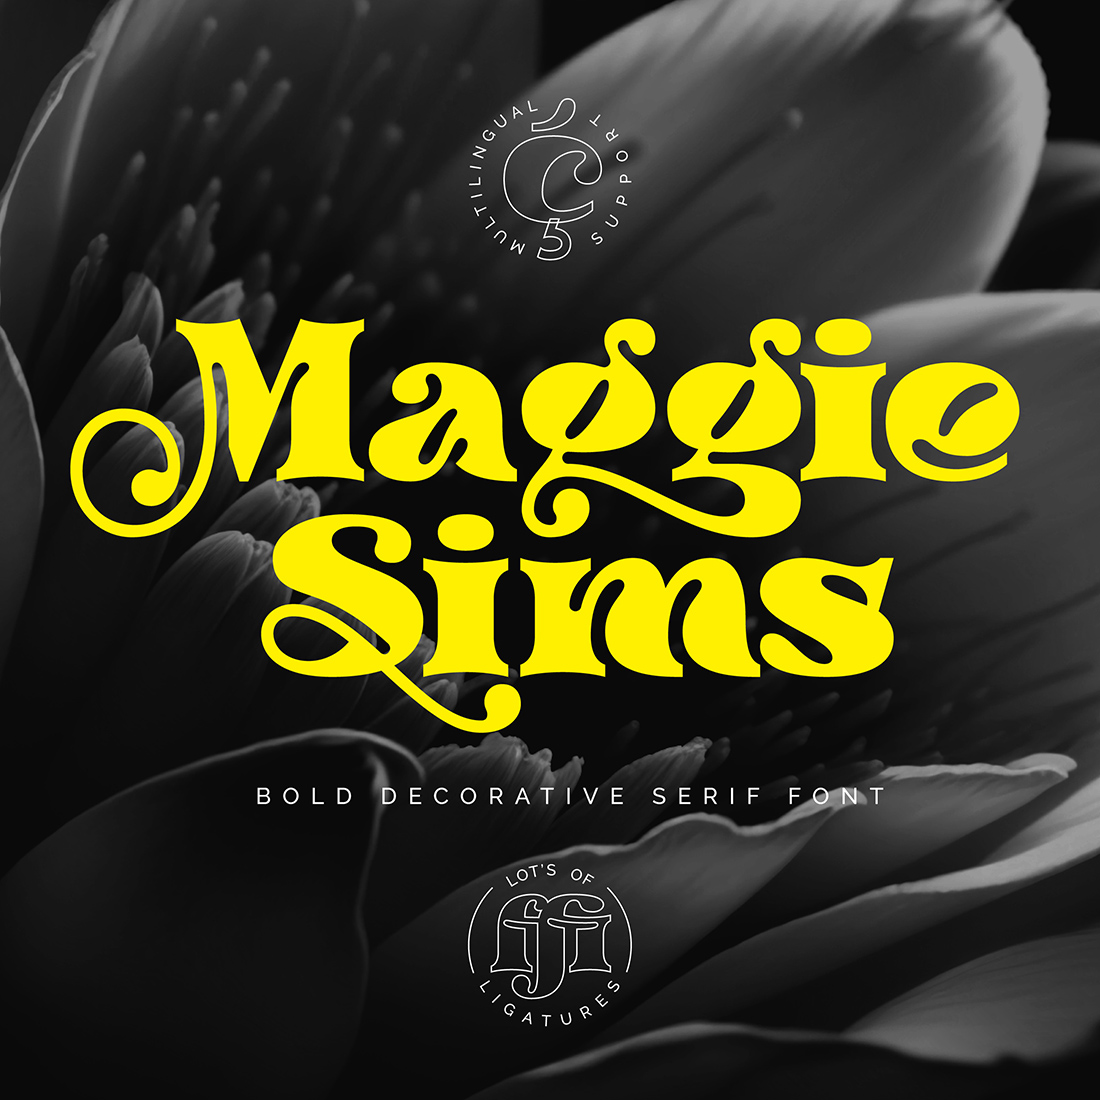 Maggie Sims - Bold Decorative Serif Font cover image.